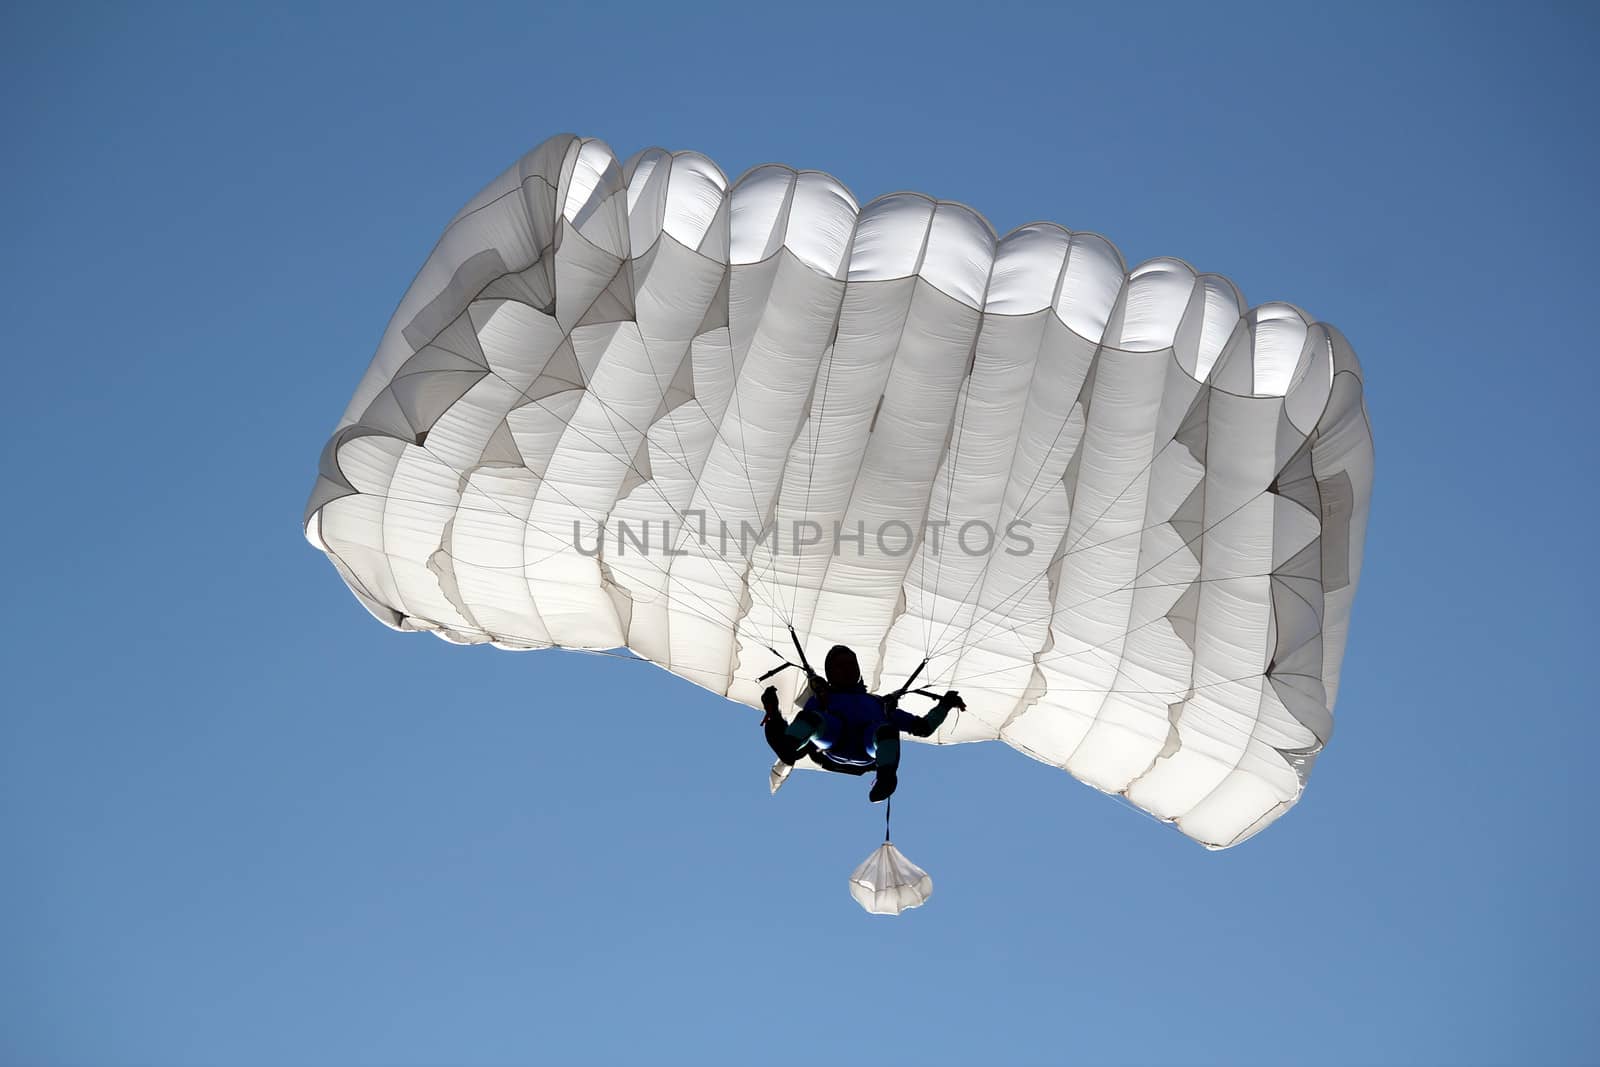 parachutist on blue sky extreme sport 